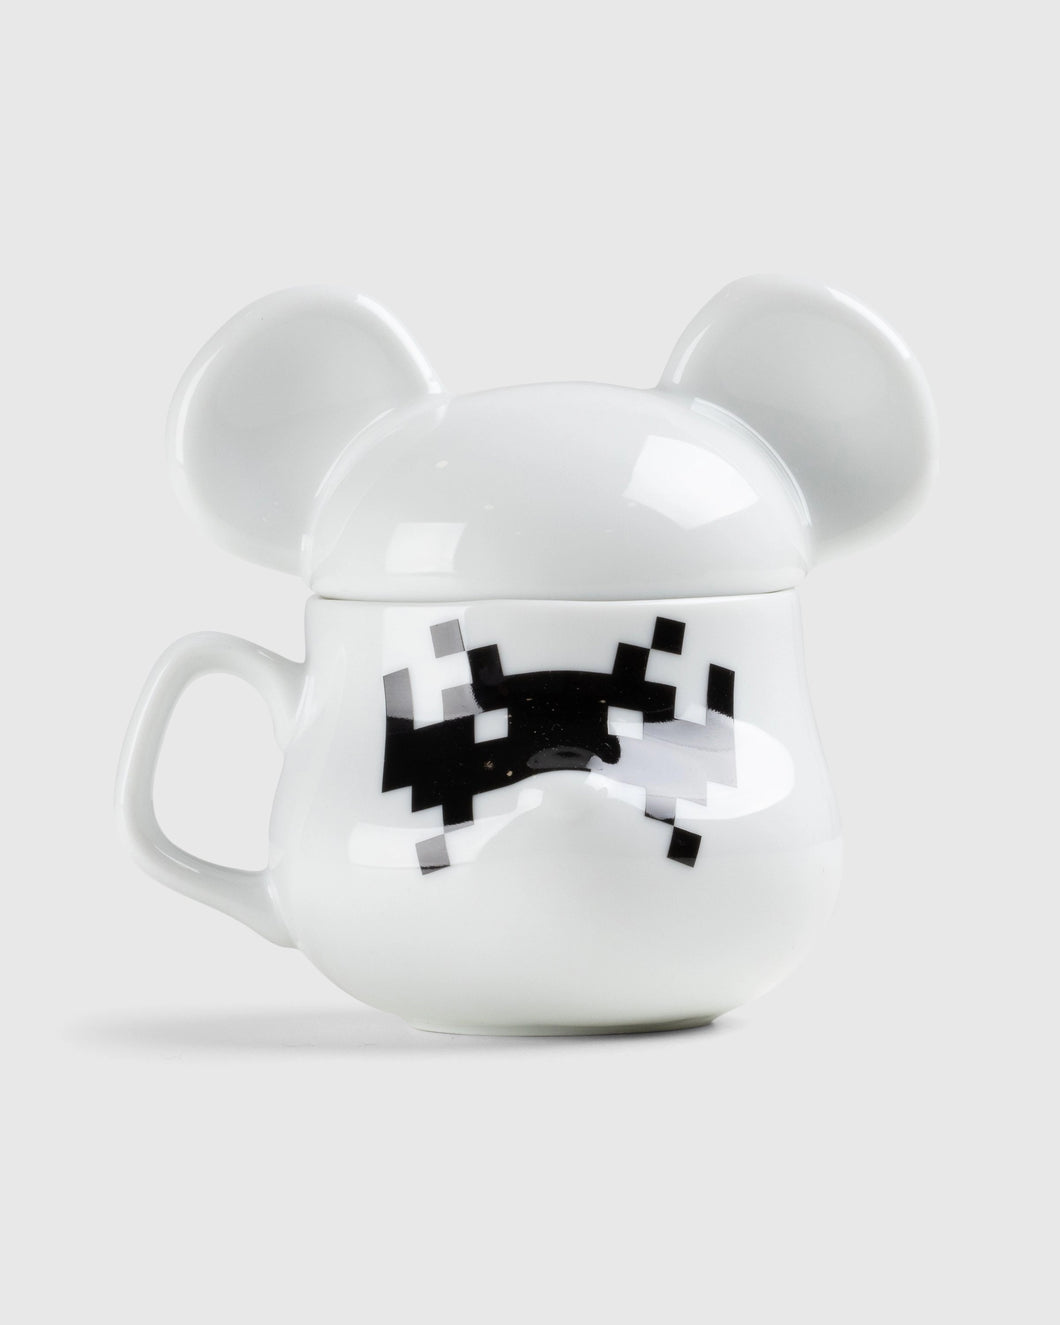 MEDICOM BE@RMUG Porcelain Mug - Space Invaders (RED)